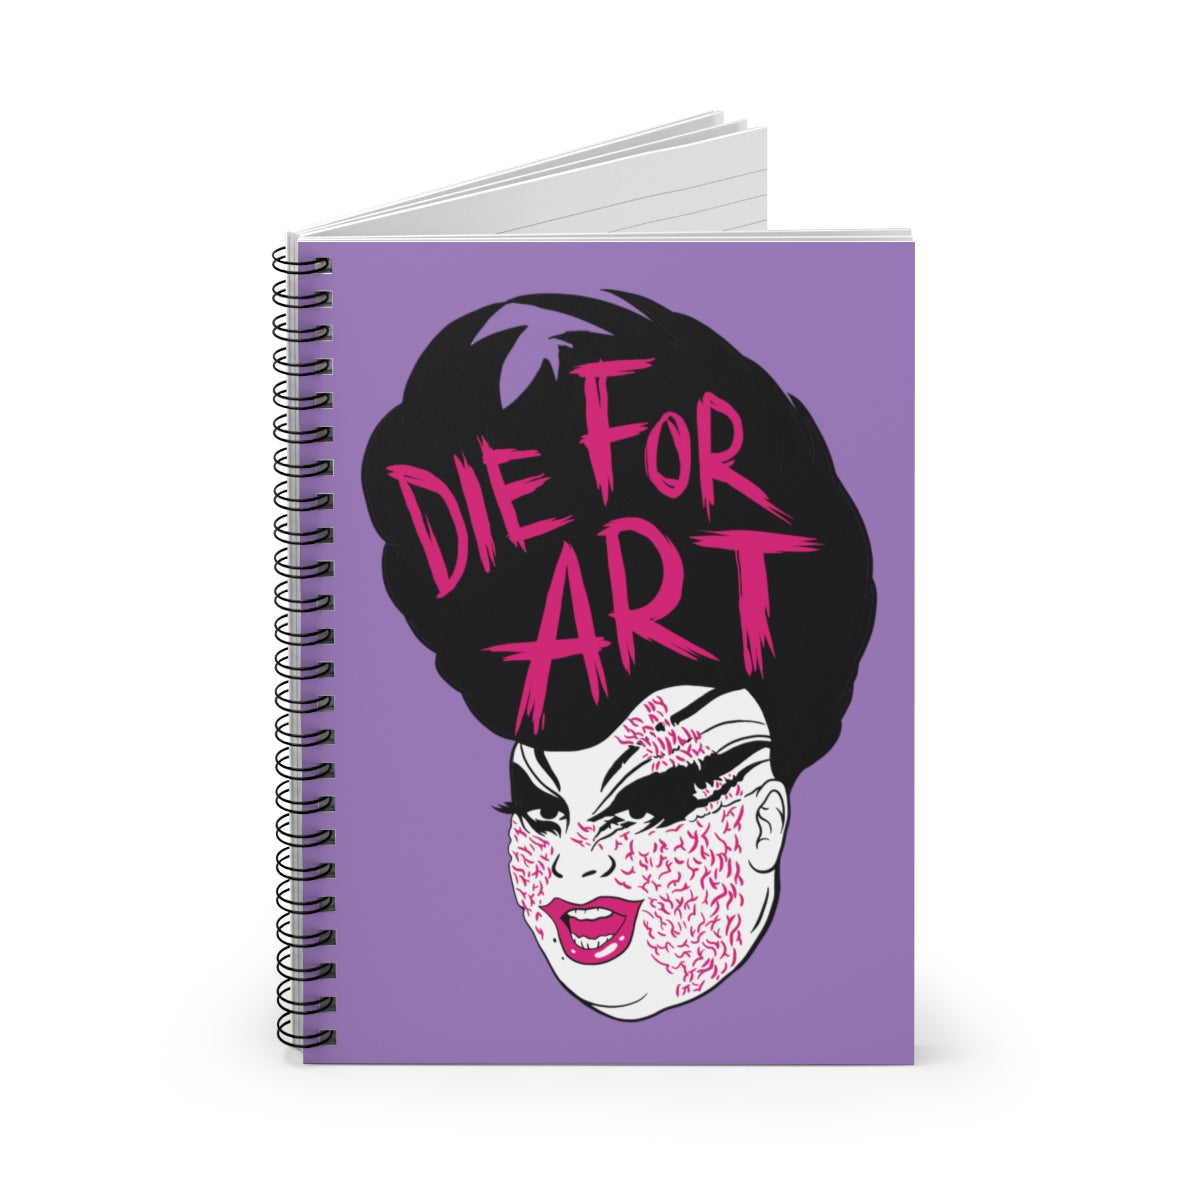 Die For Art Spiral Notebook - Ruled Line - MISTERBNATION